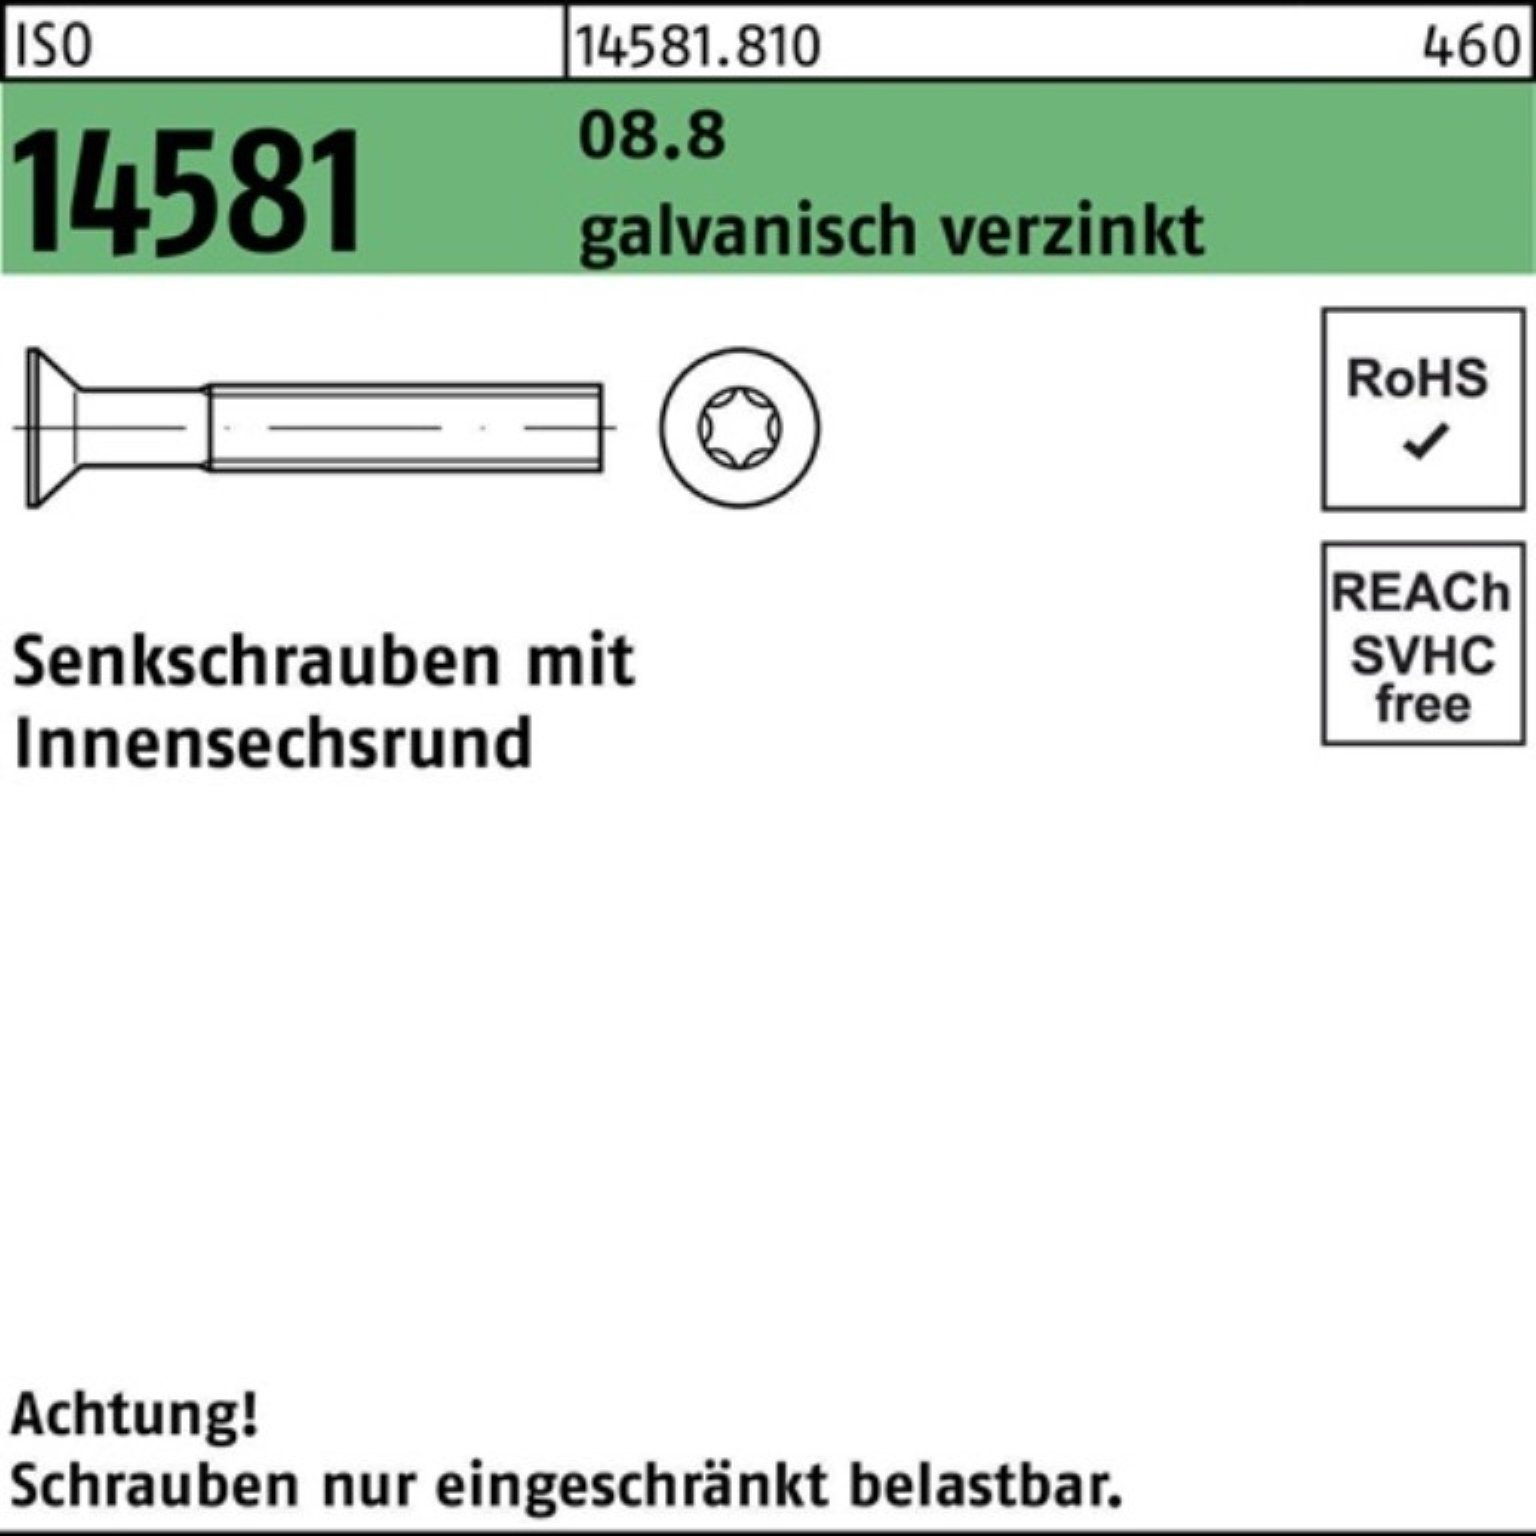 Reyher Senkschraube 200er Pack Senkschraube ISO 14581 ISR M8x16 T45 8.8 galv.verz. 200St.